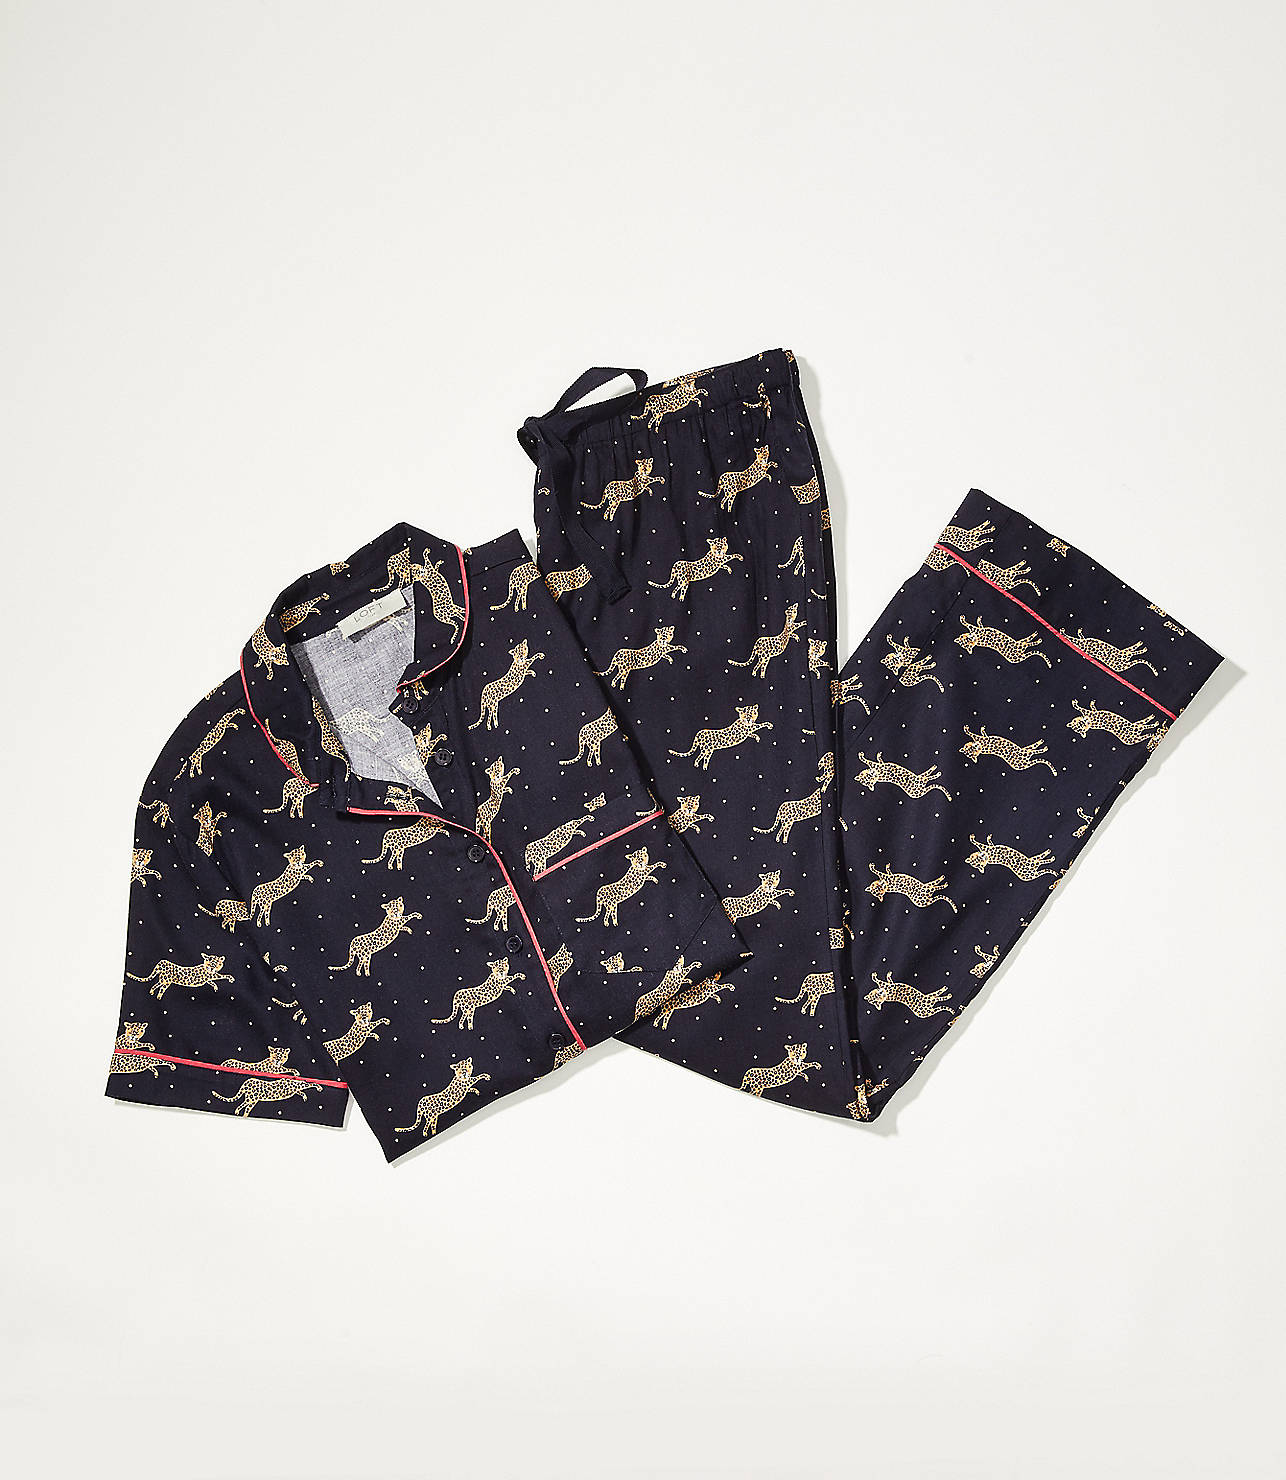 Cheetah Print Pajama Set